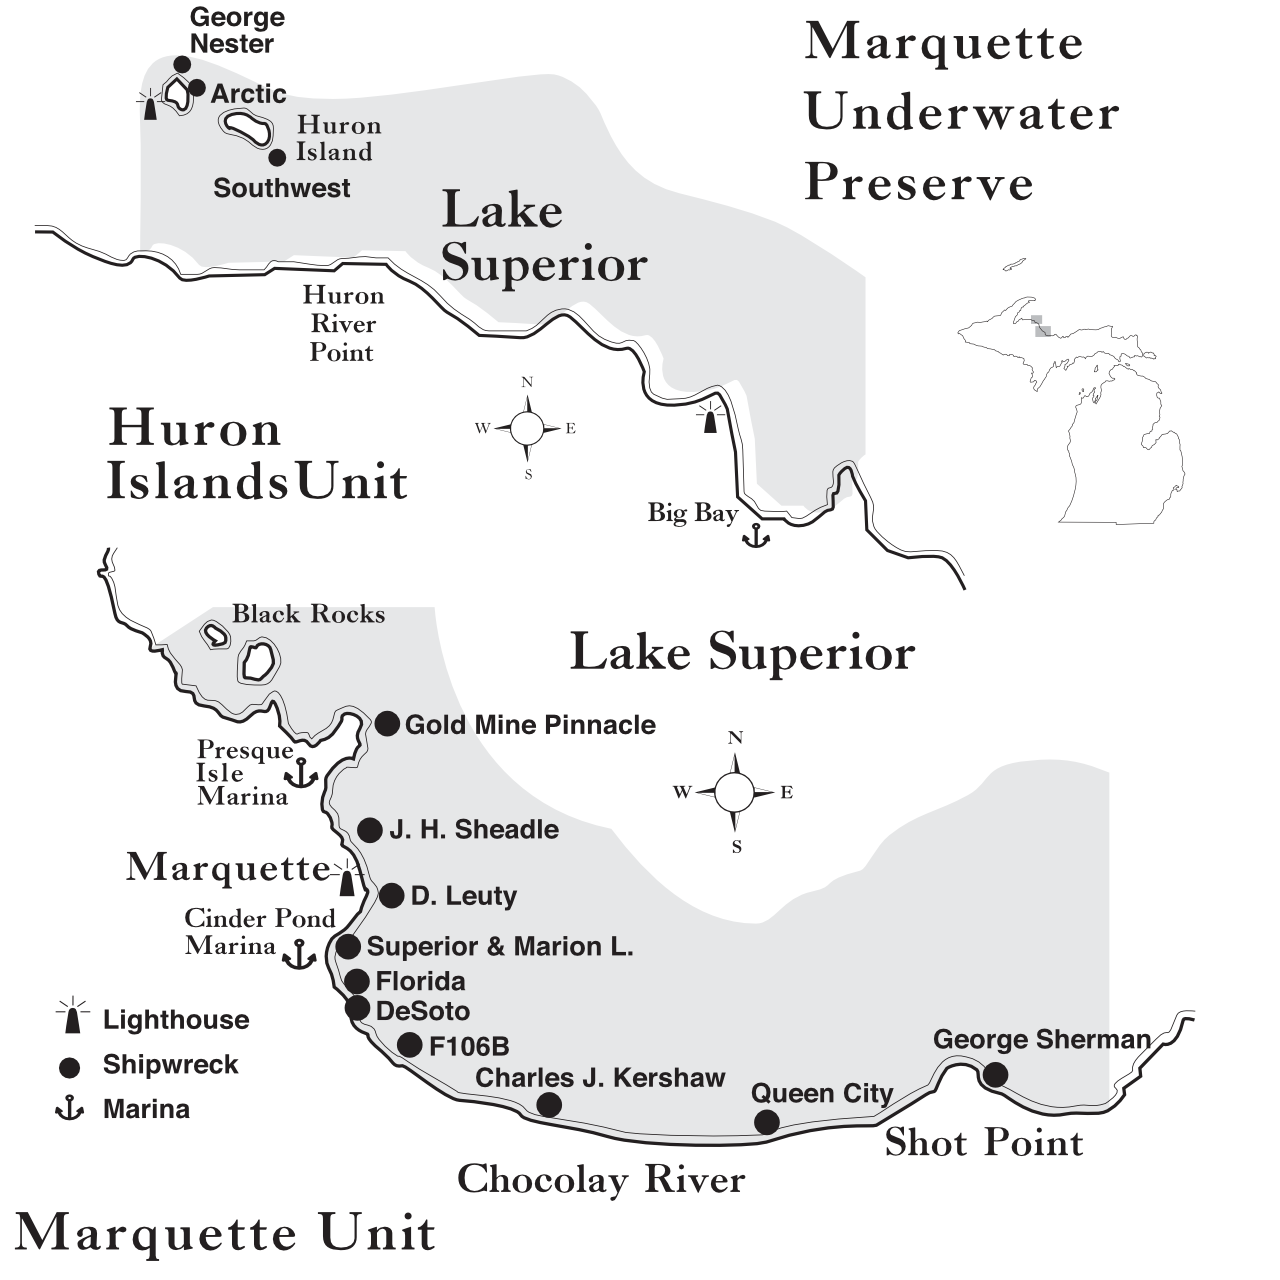 Marquette Underwater Preserve Map